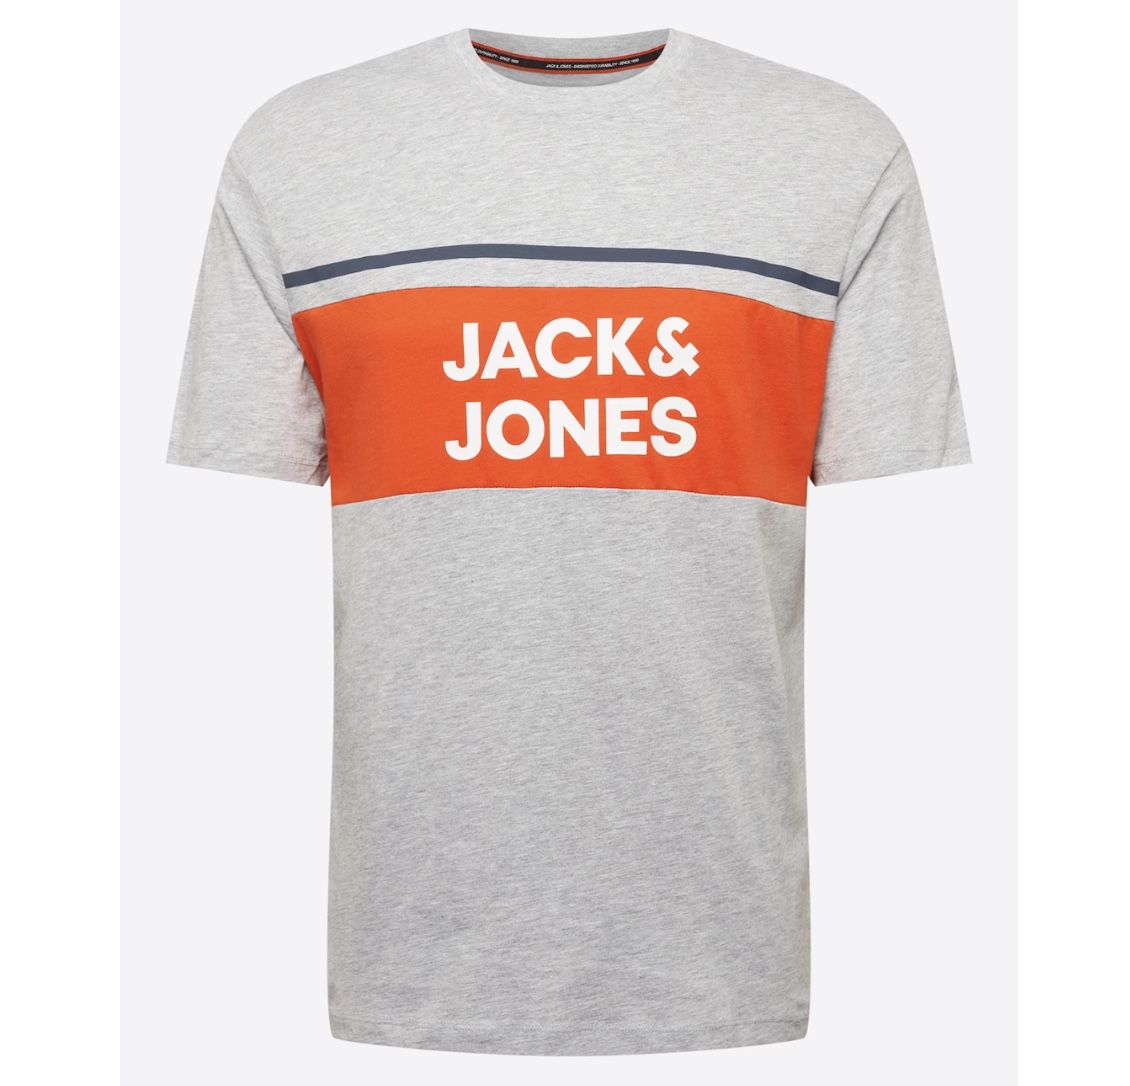 Jack & Jones Herren T Shirt Conrad für 4,76€ (statt 16€)   S, M, L